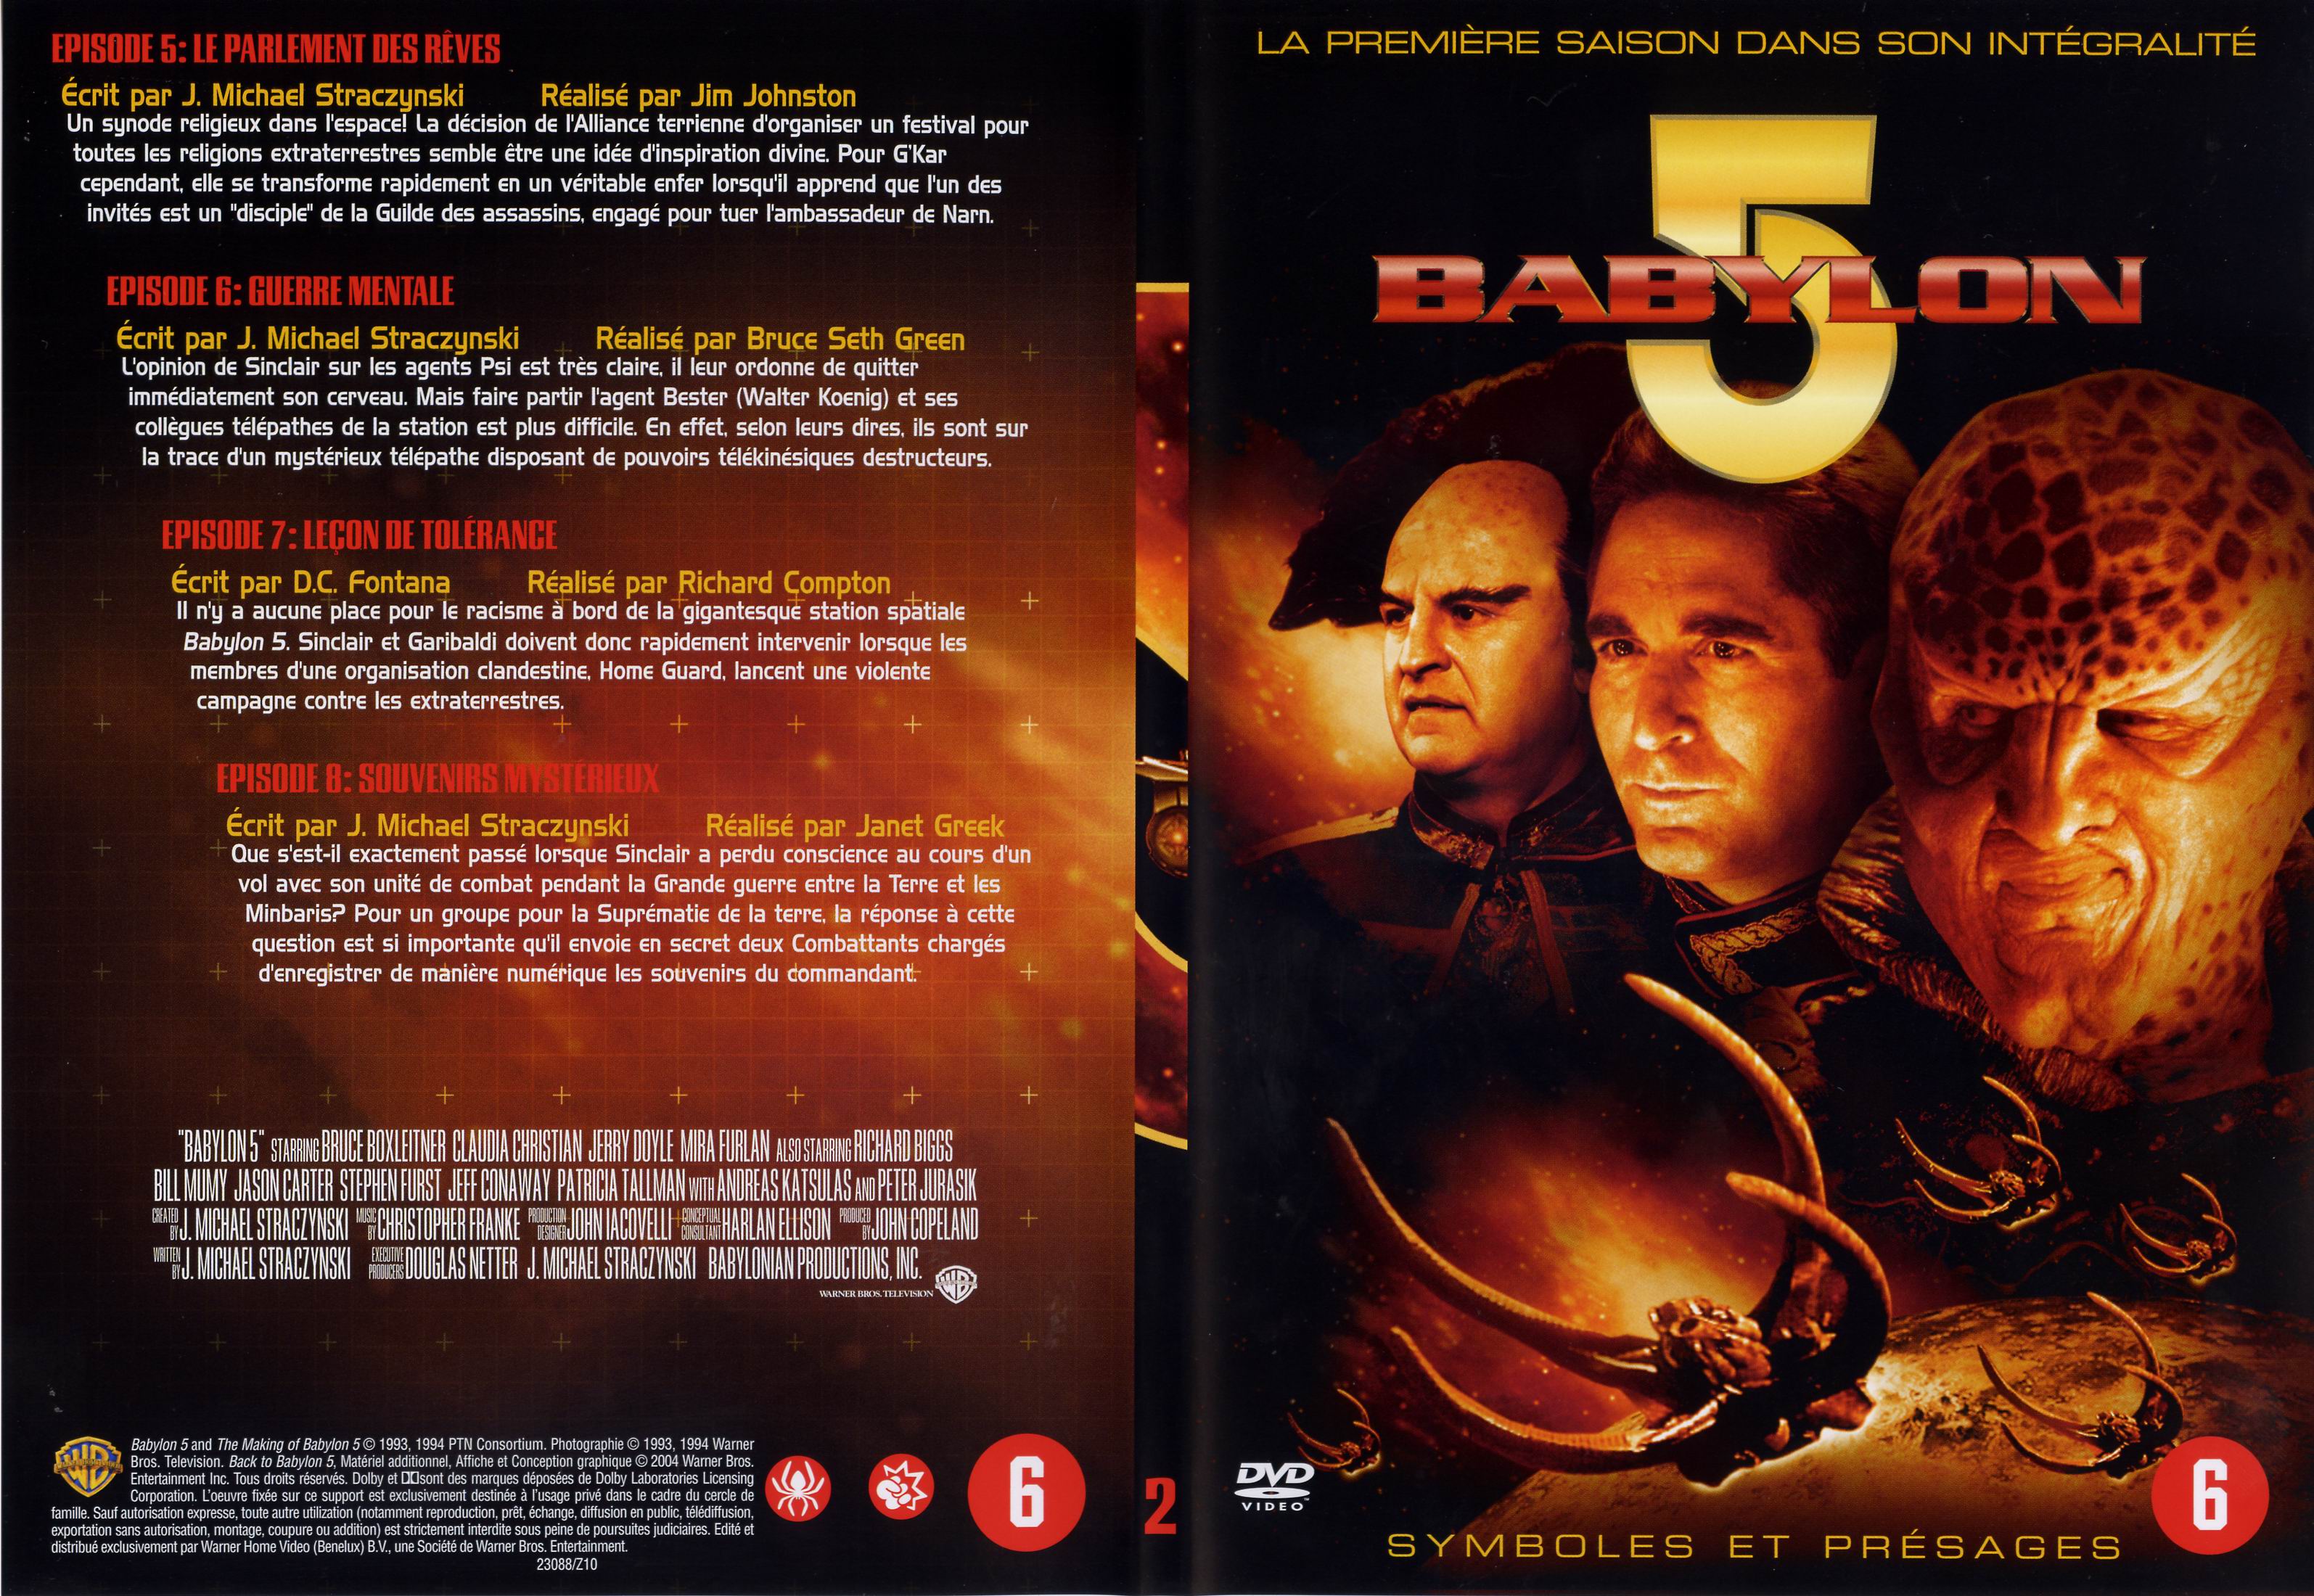 Jaquette DVD Babylon 5 saison 1 dvd 2